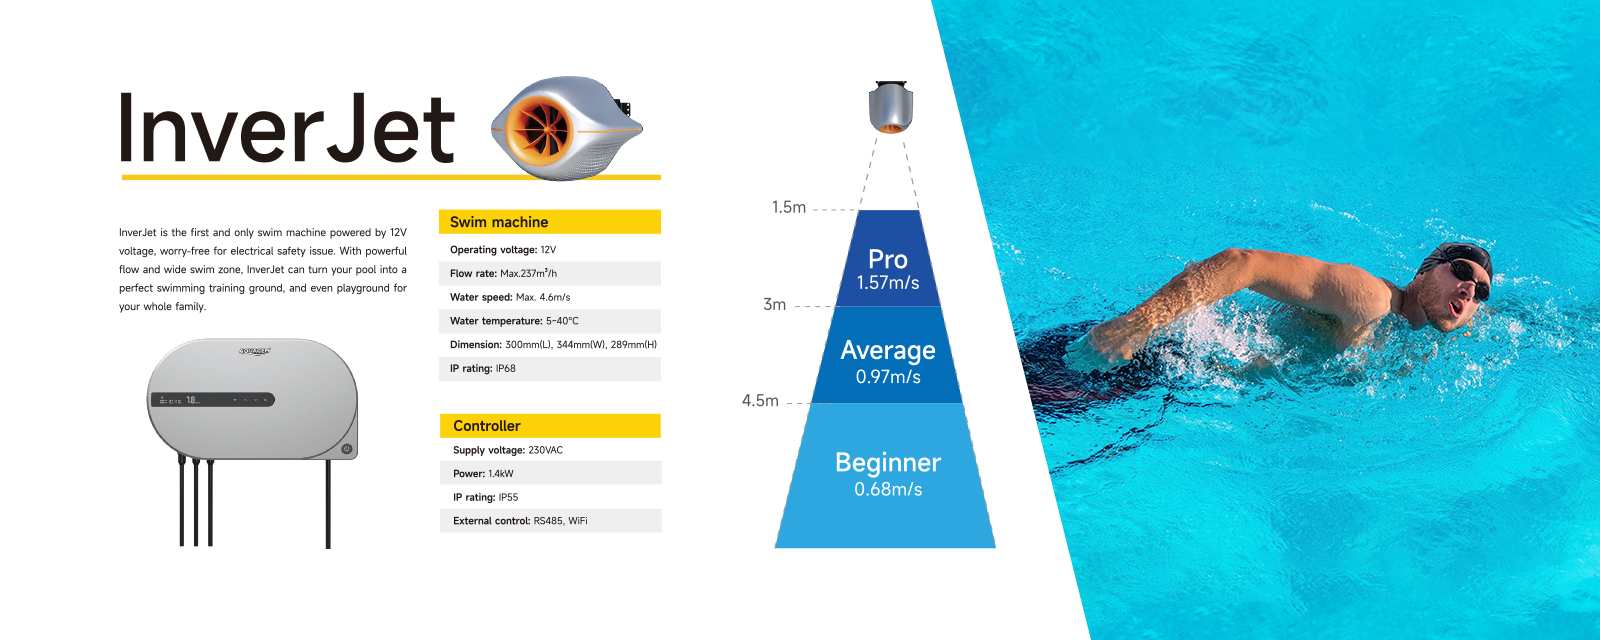 swimming Pool current machine inverjet - First & Only 12V Swim Machine